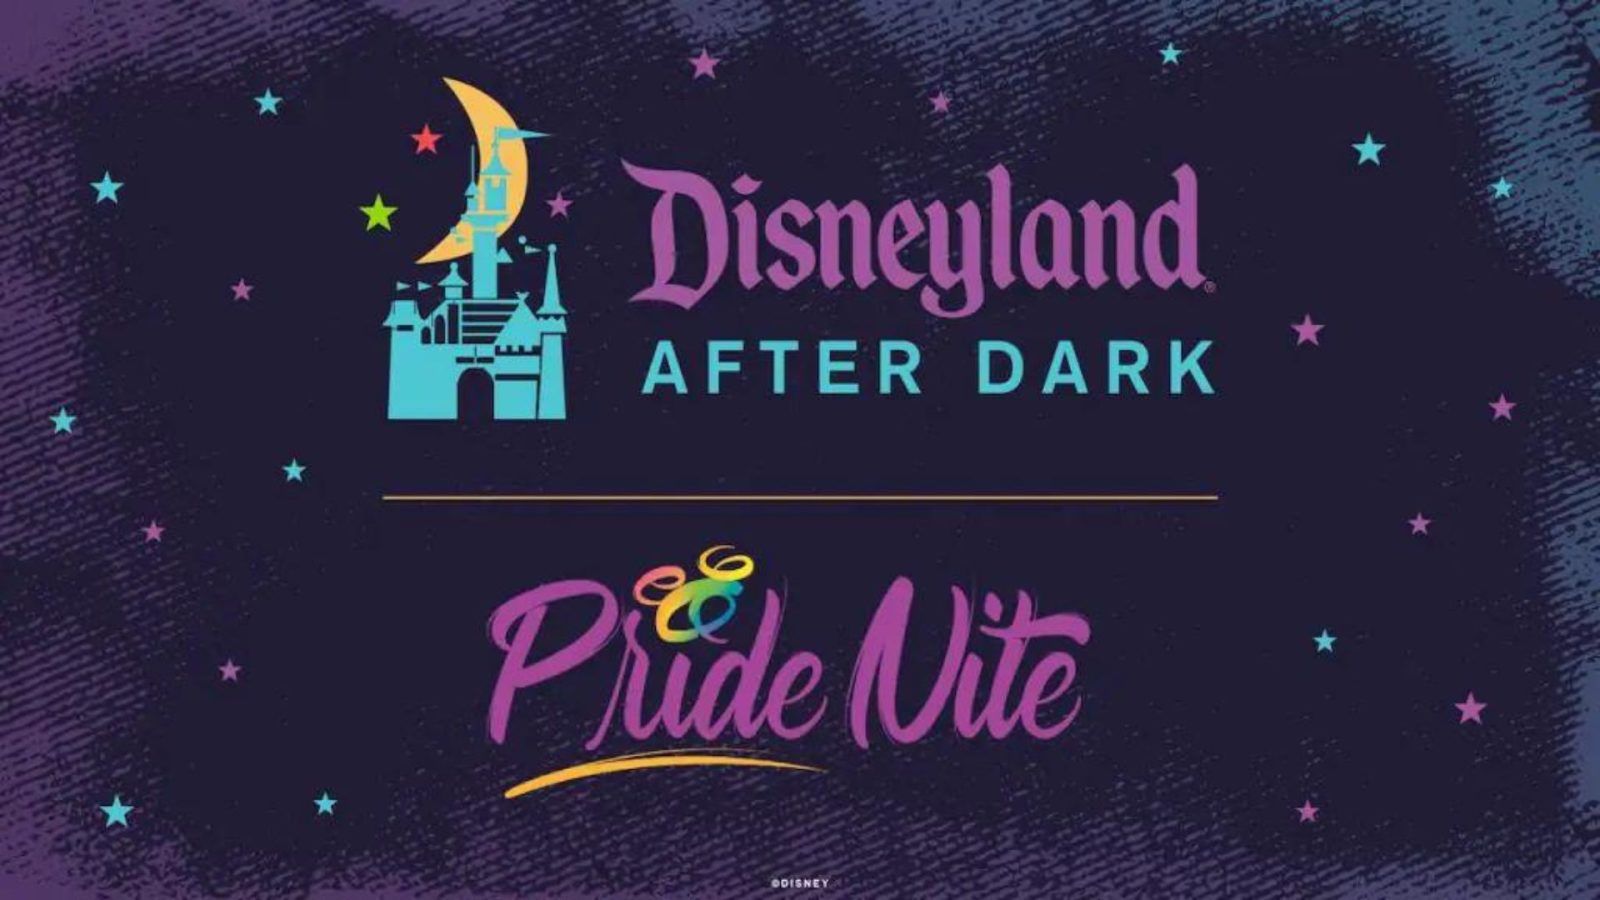 Disneyland Announces FirstEver 'Pride Nite' For The LGBTQ+ Community